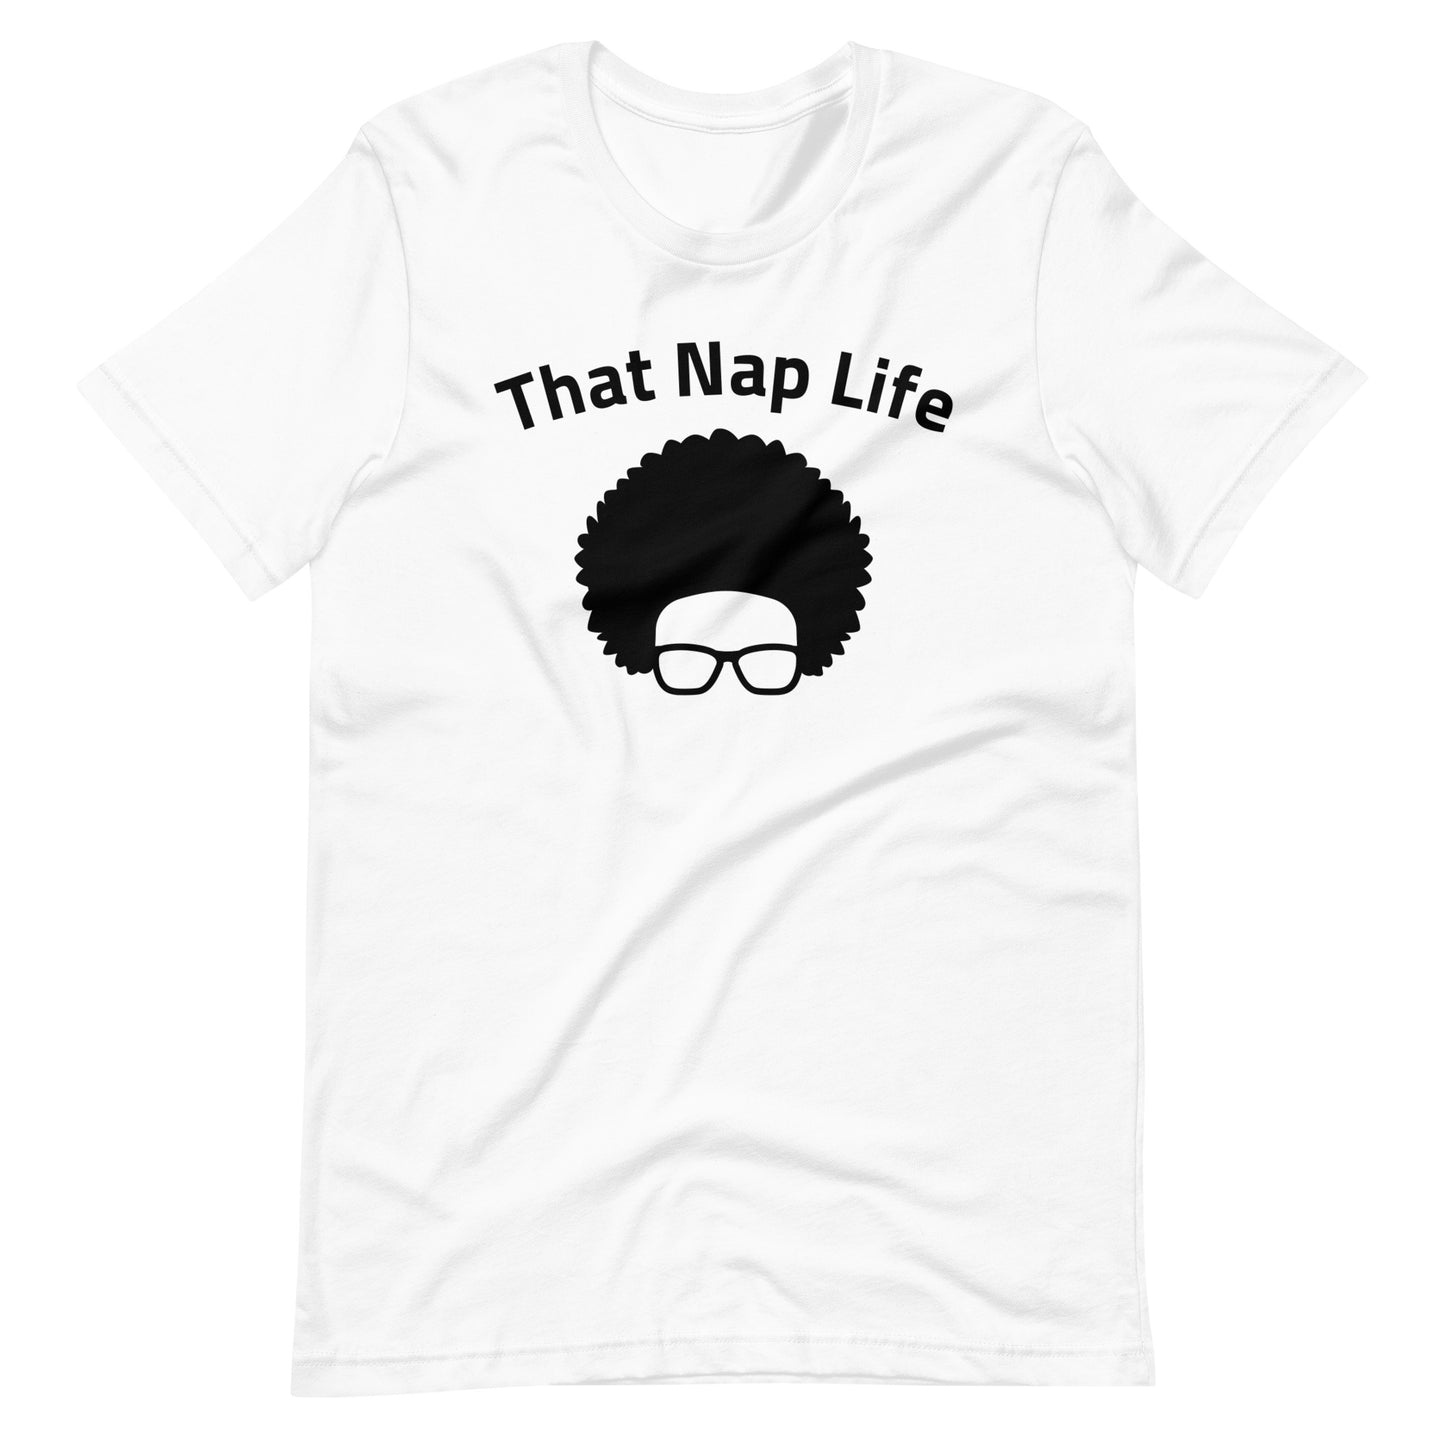 That Nap Life T-shirt